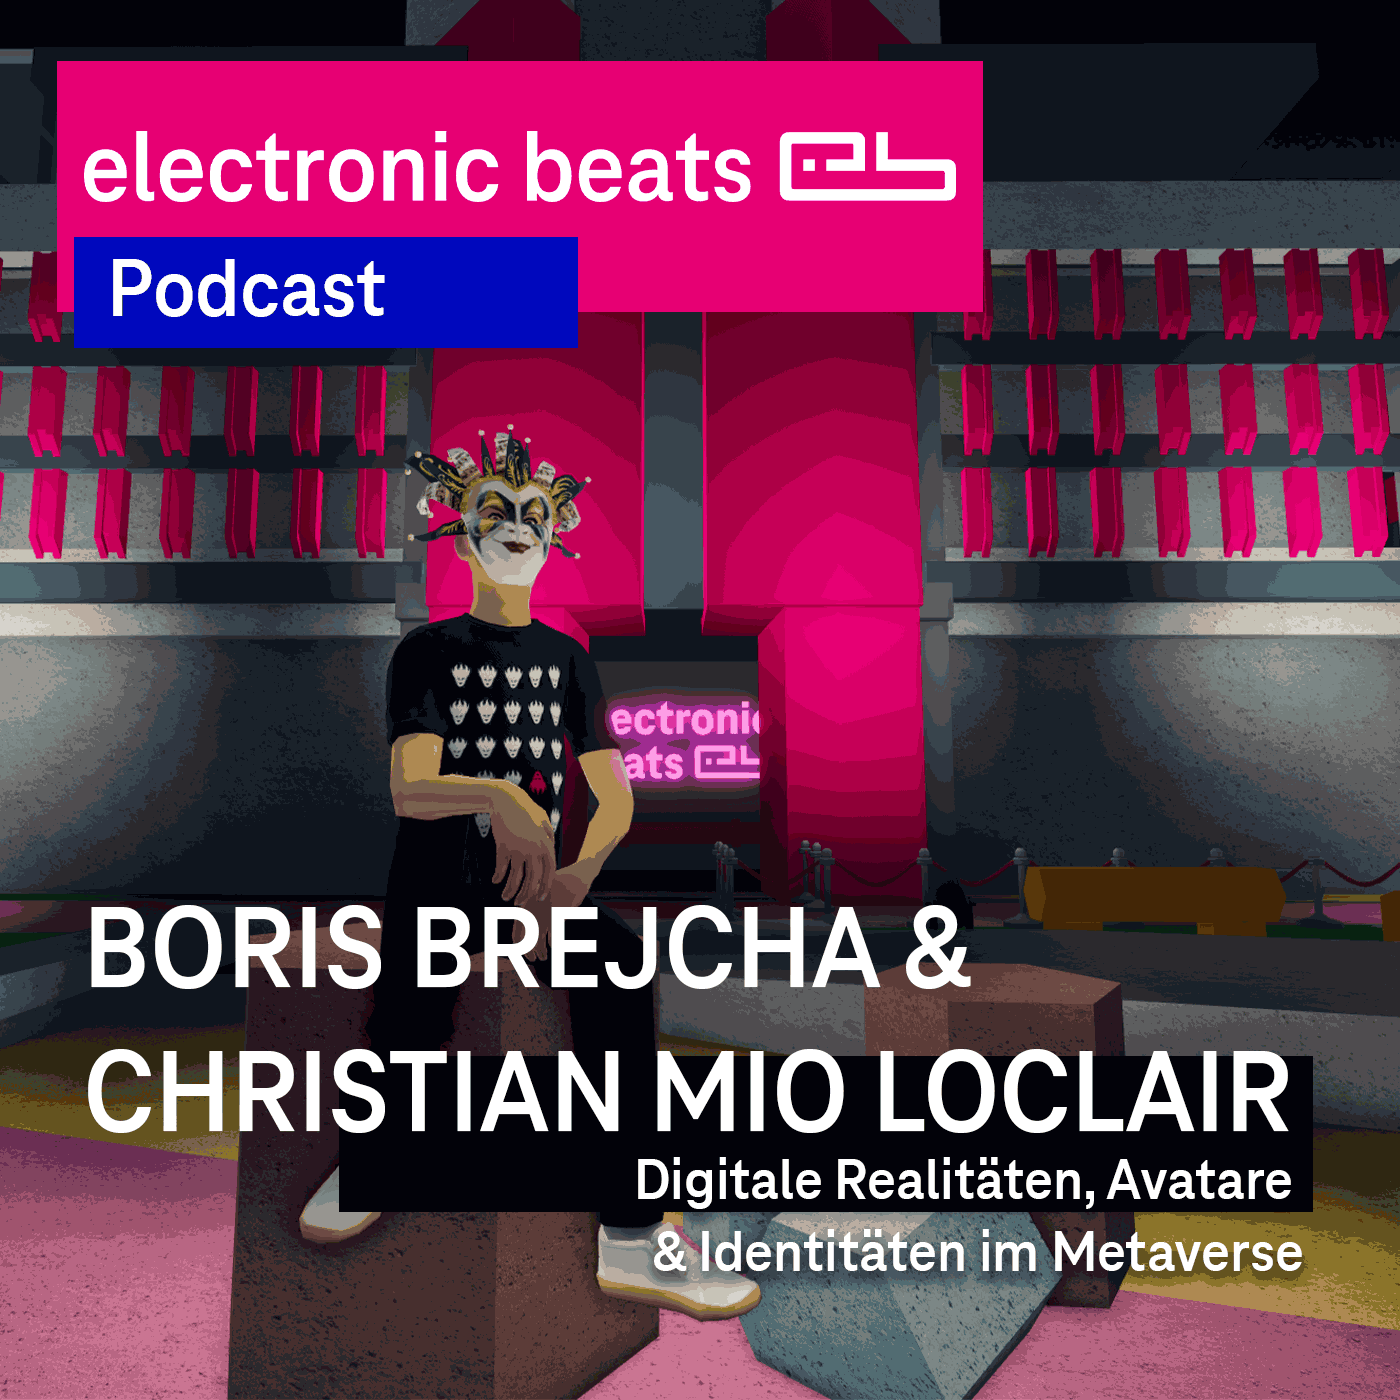 Boris Brejcha & Christian Mio Loclair - Digitale Realitäten, Avatare & Metaverse